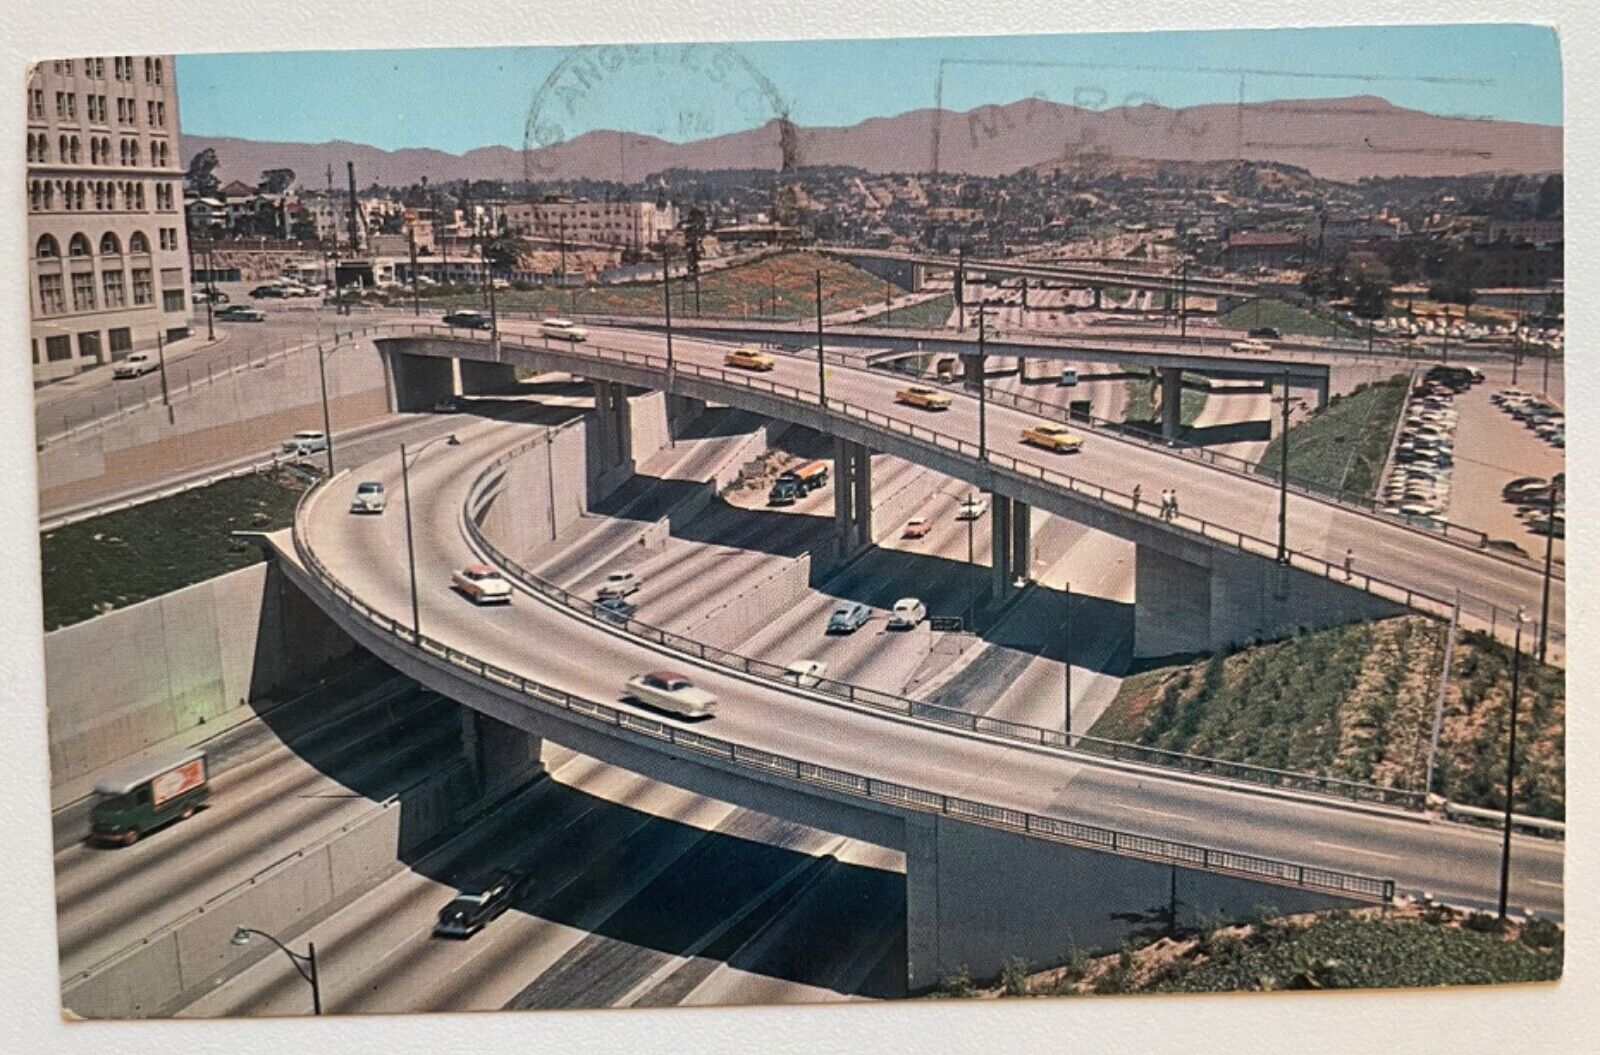 Harbor Freeway Los Angeles California CA 1967 CHrome Postcard, towards Pasadena